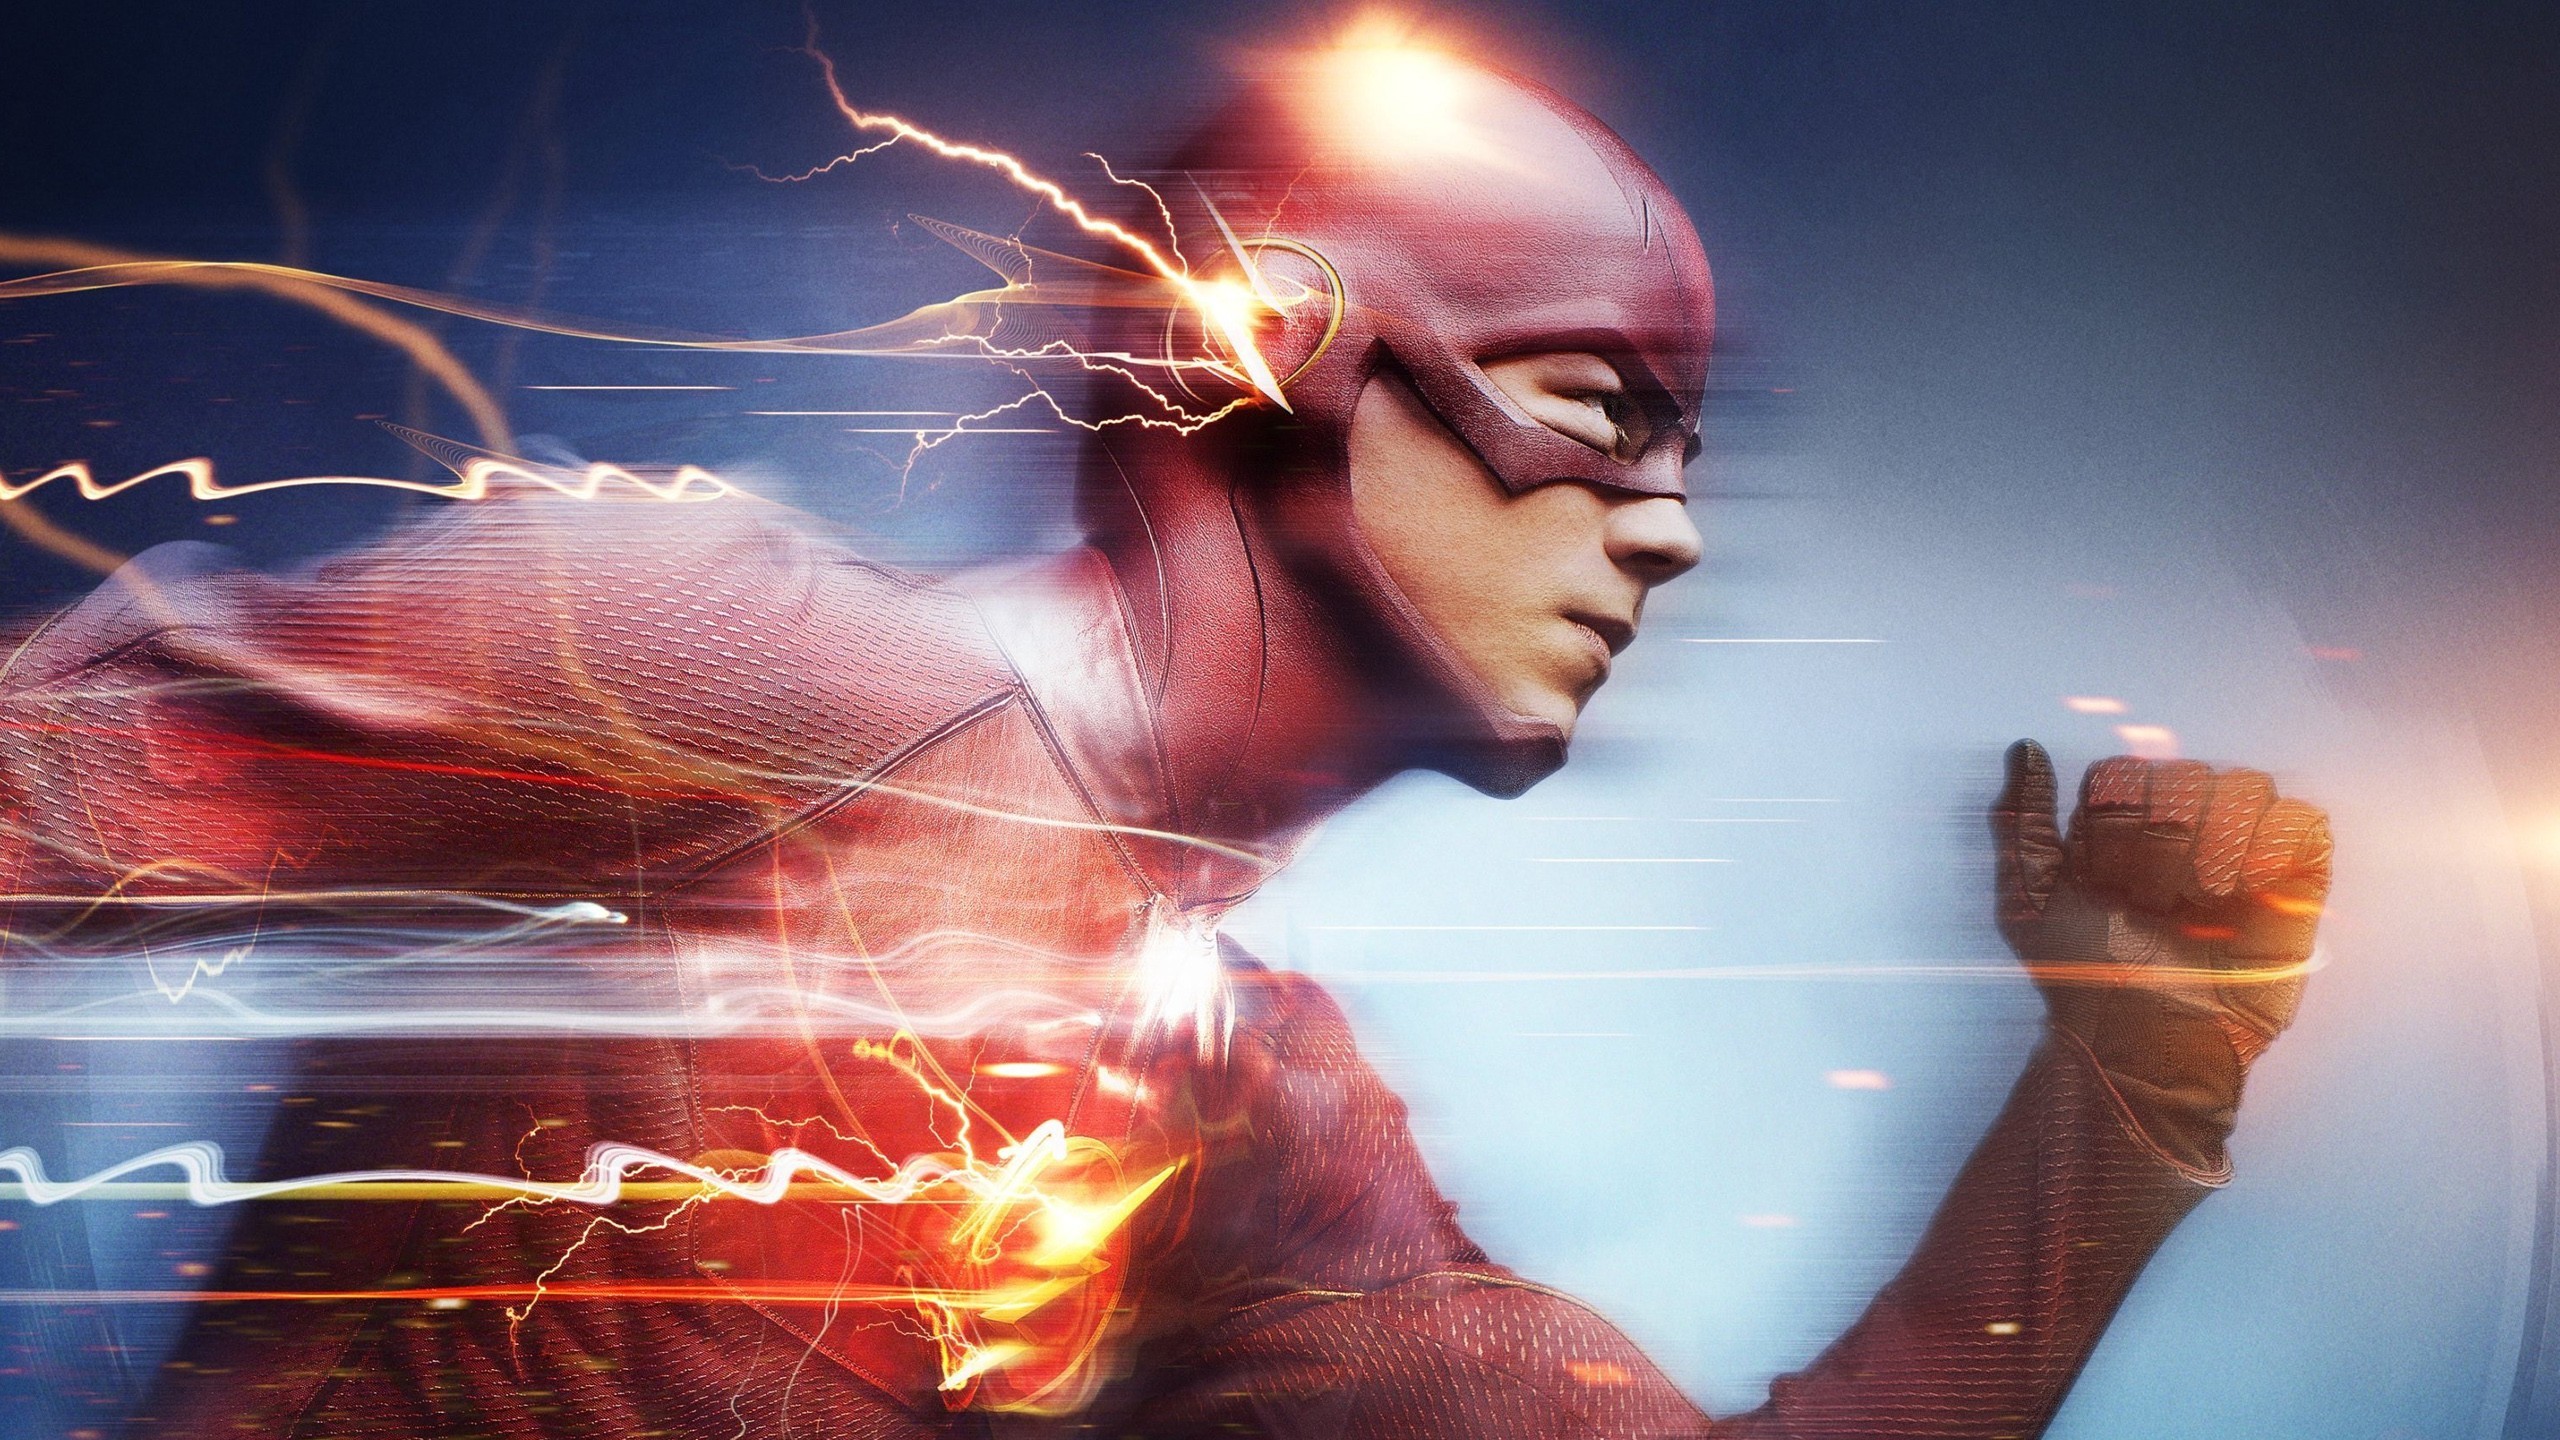 2560x1440 ... x 1440 Original. Description: Download Barry Allen The Flash TV Series  wallpaper ...